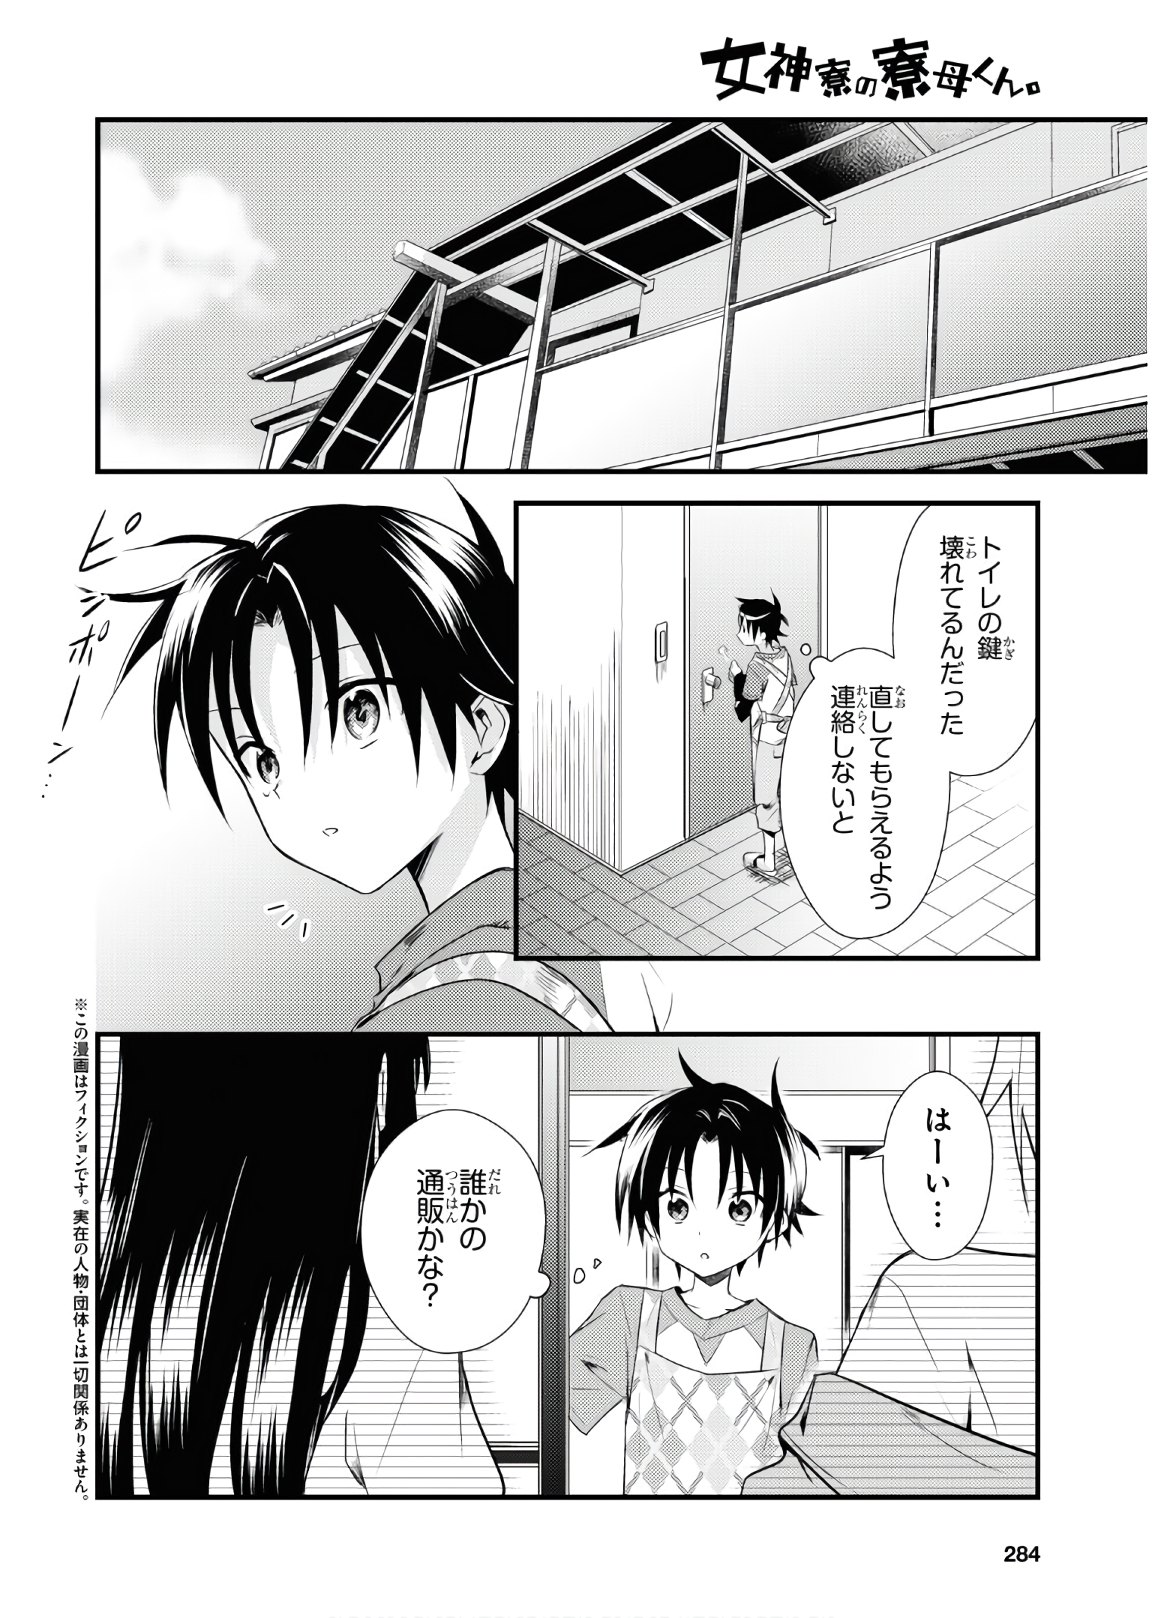 Megami-ryou no Ryoubo-kun - Chapter 31 - Page 2